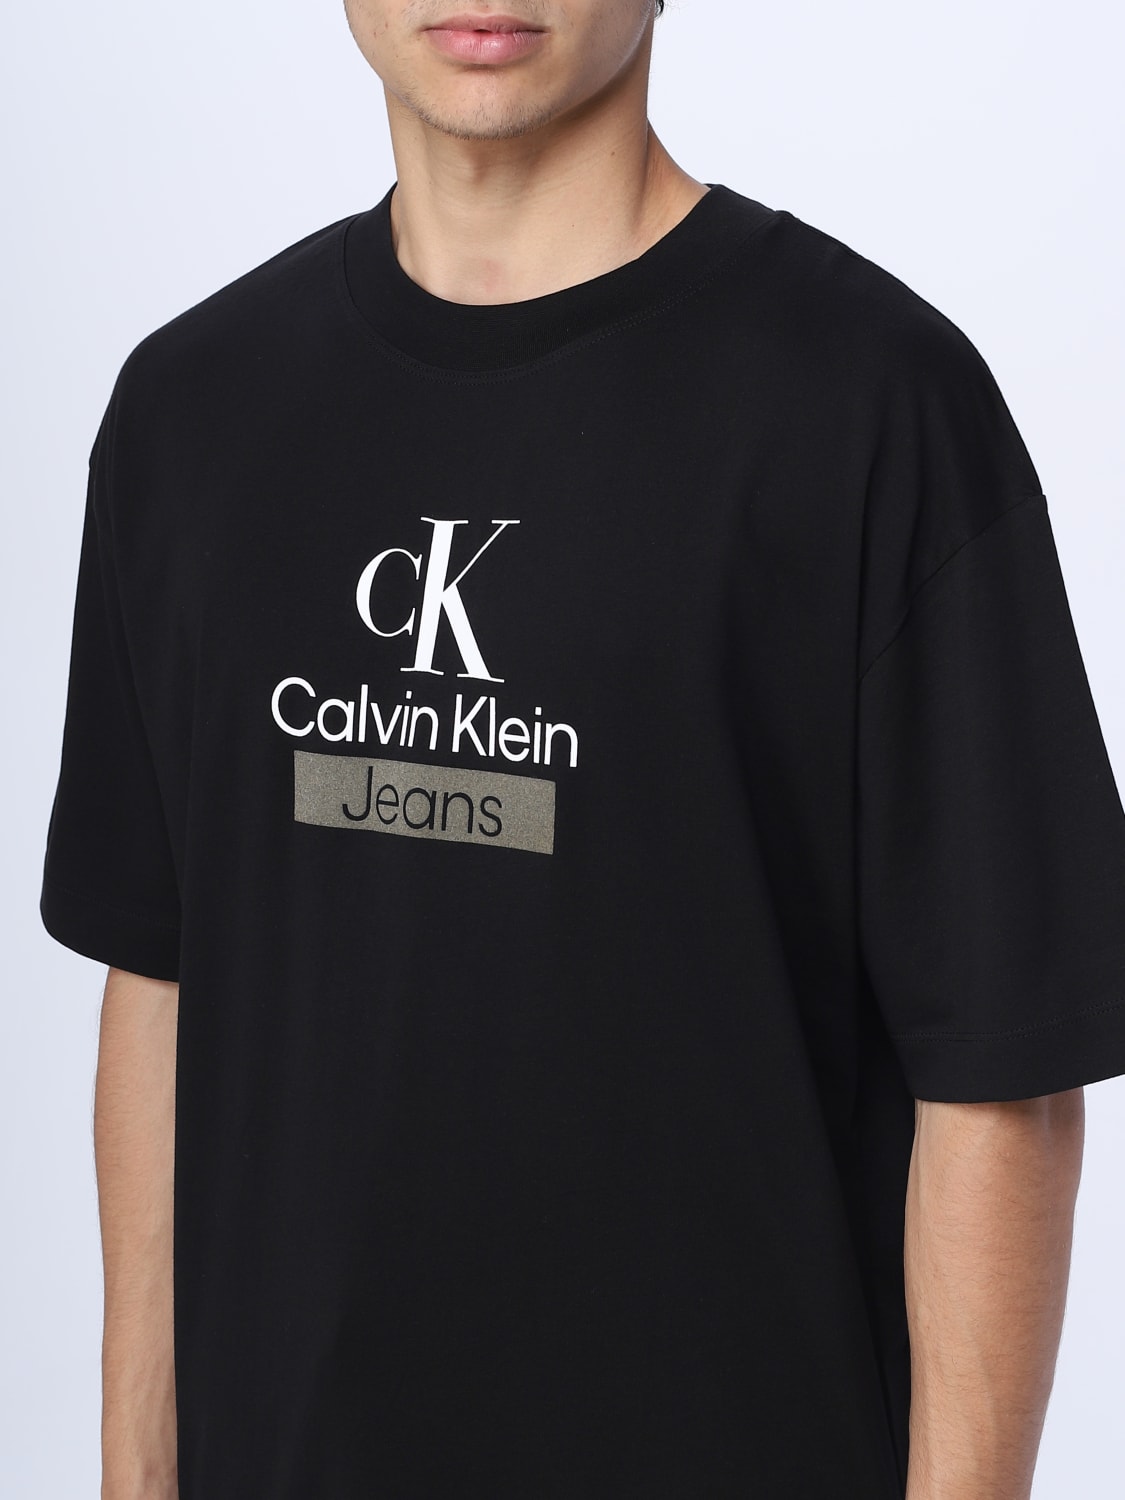 CALVIN KLEIN JEANS: t-shirt for men - Black | Calvin Klein Jeans t ...